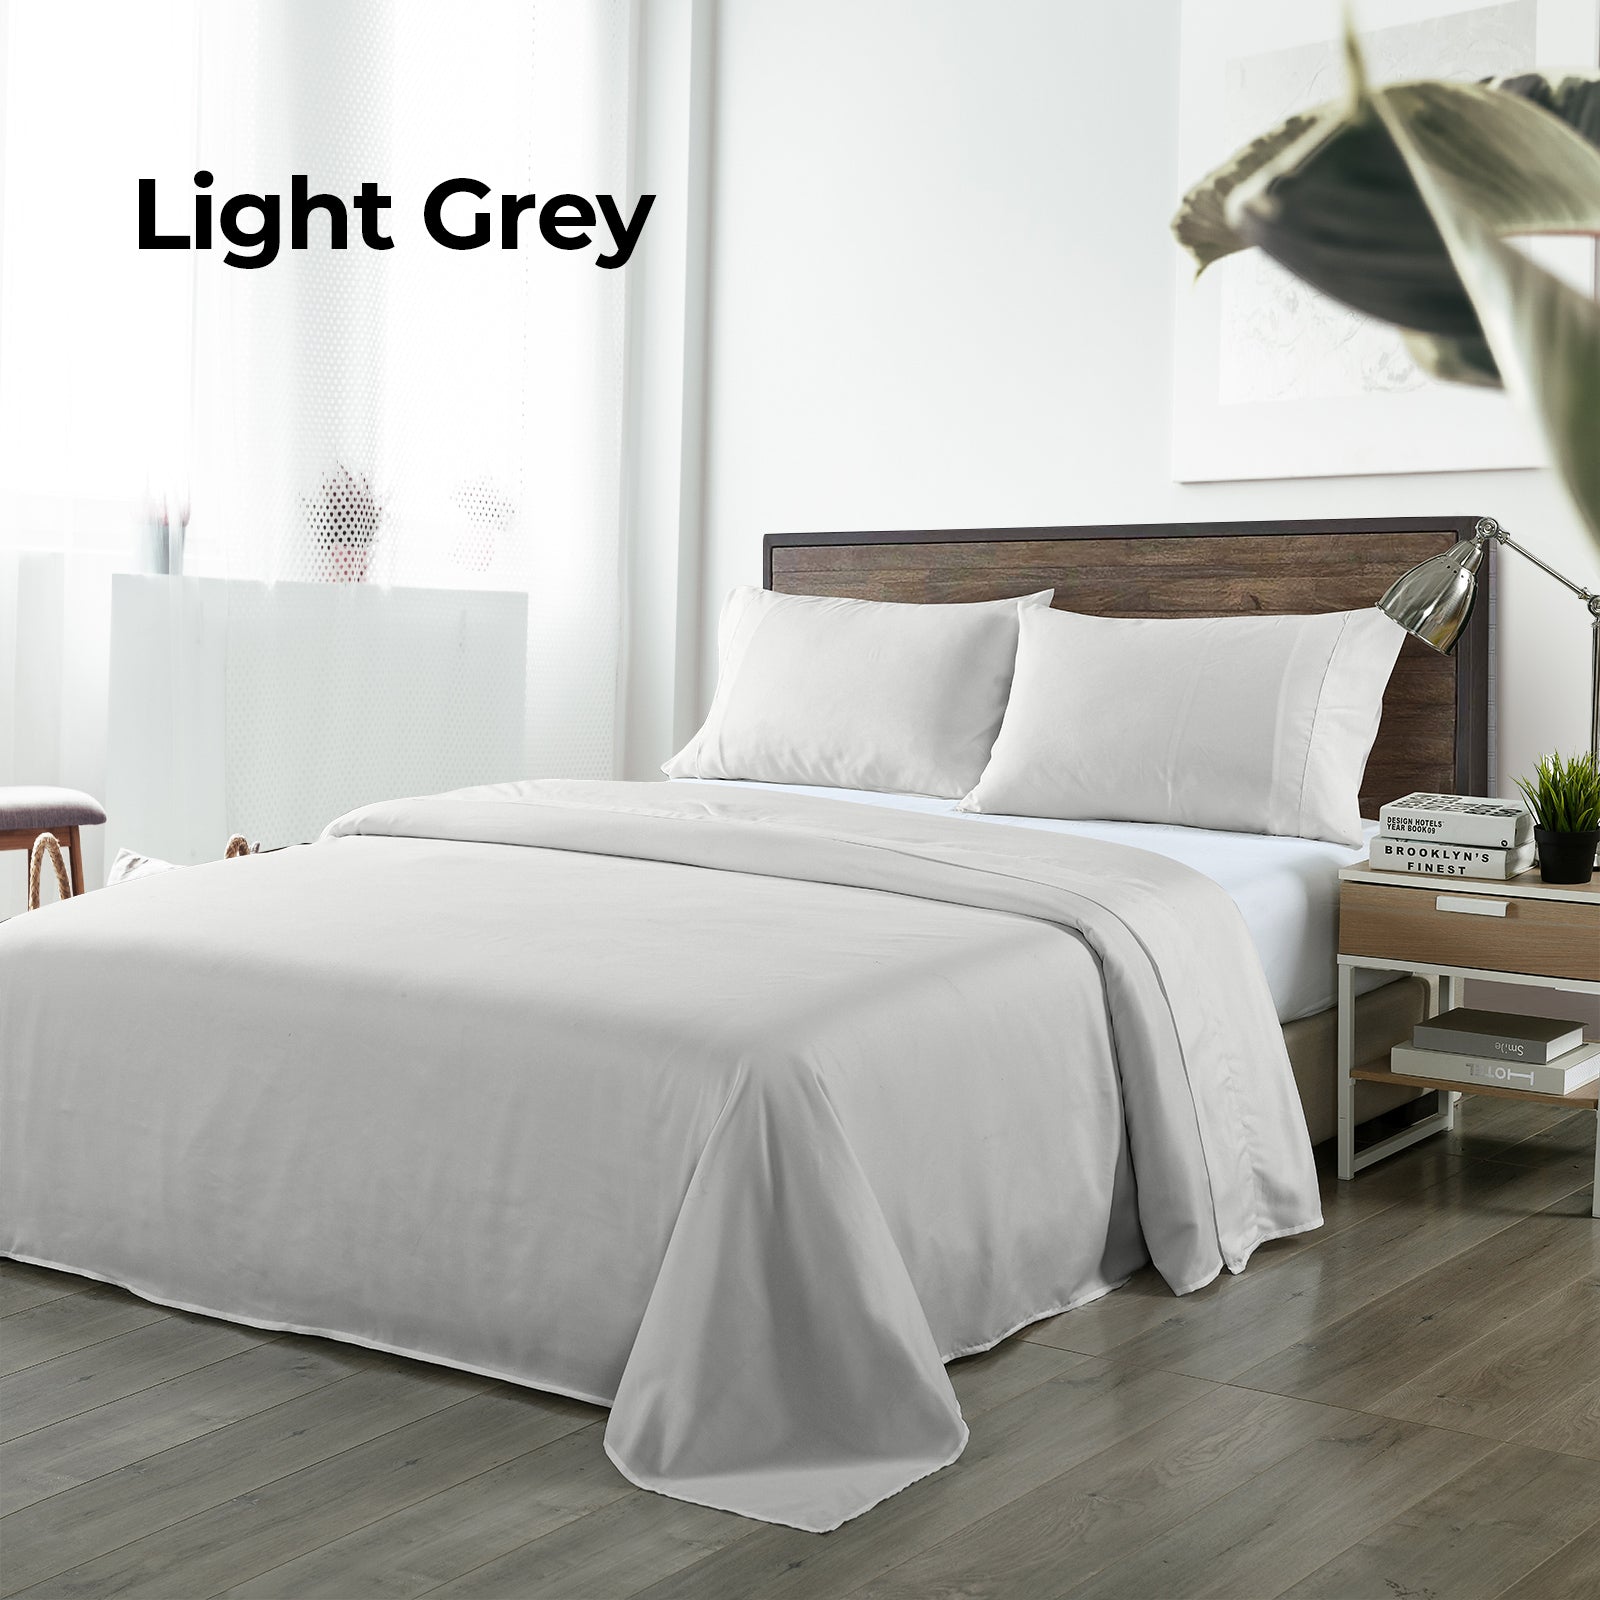 Royal Comfort Blended Bamboo Sheet Set Light Grey - King